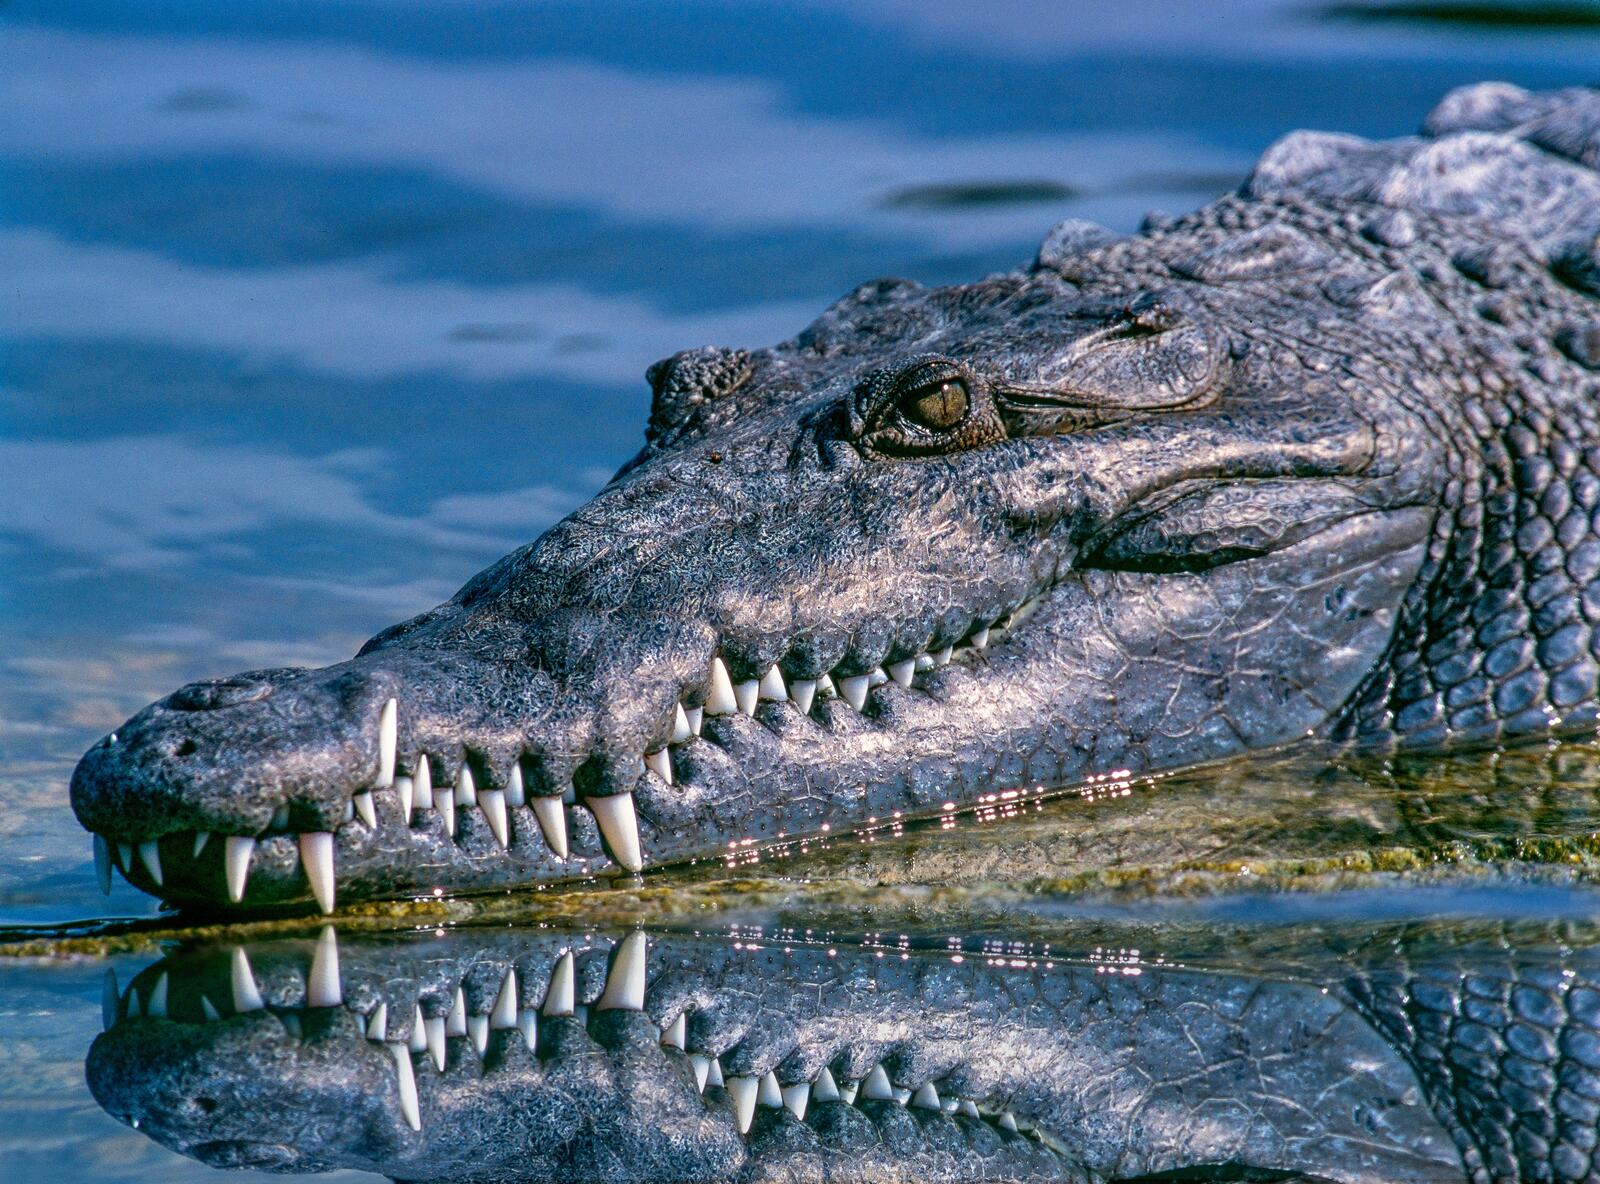 Free photo Crocodile basking in the sun on the riverbank